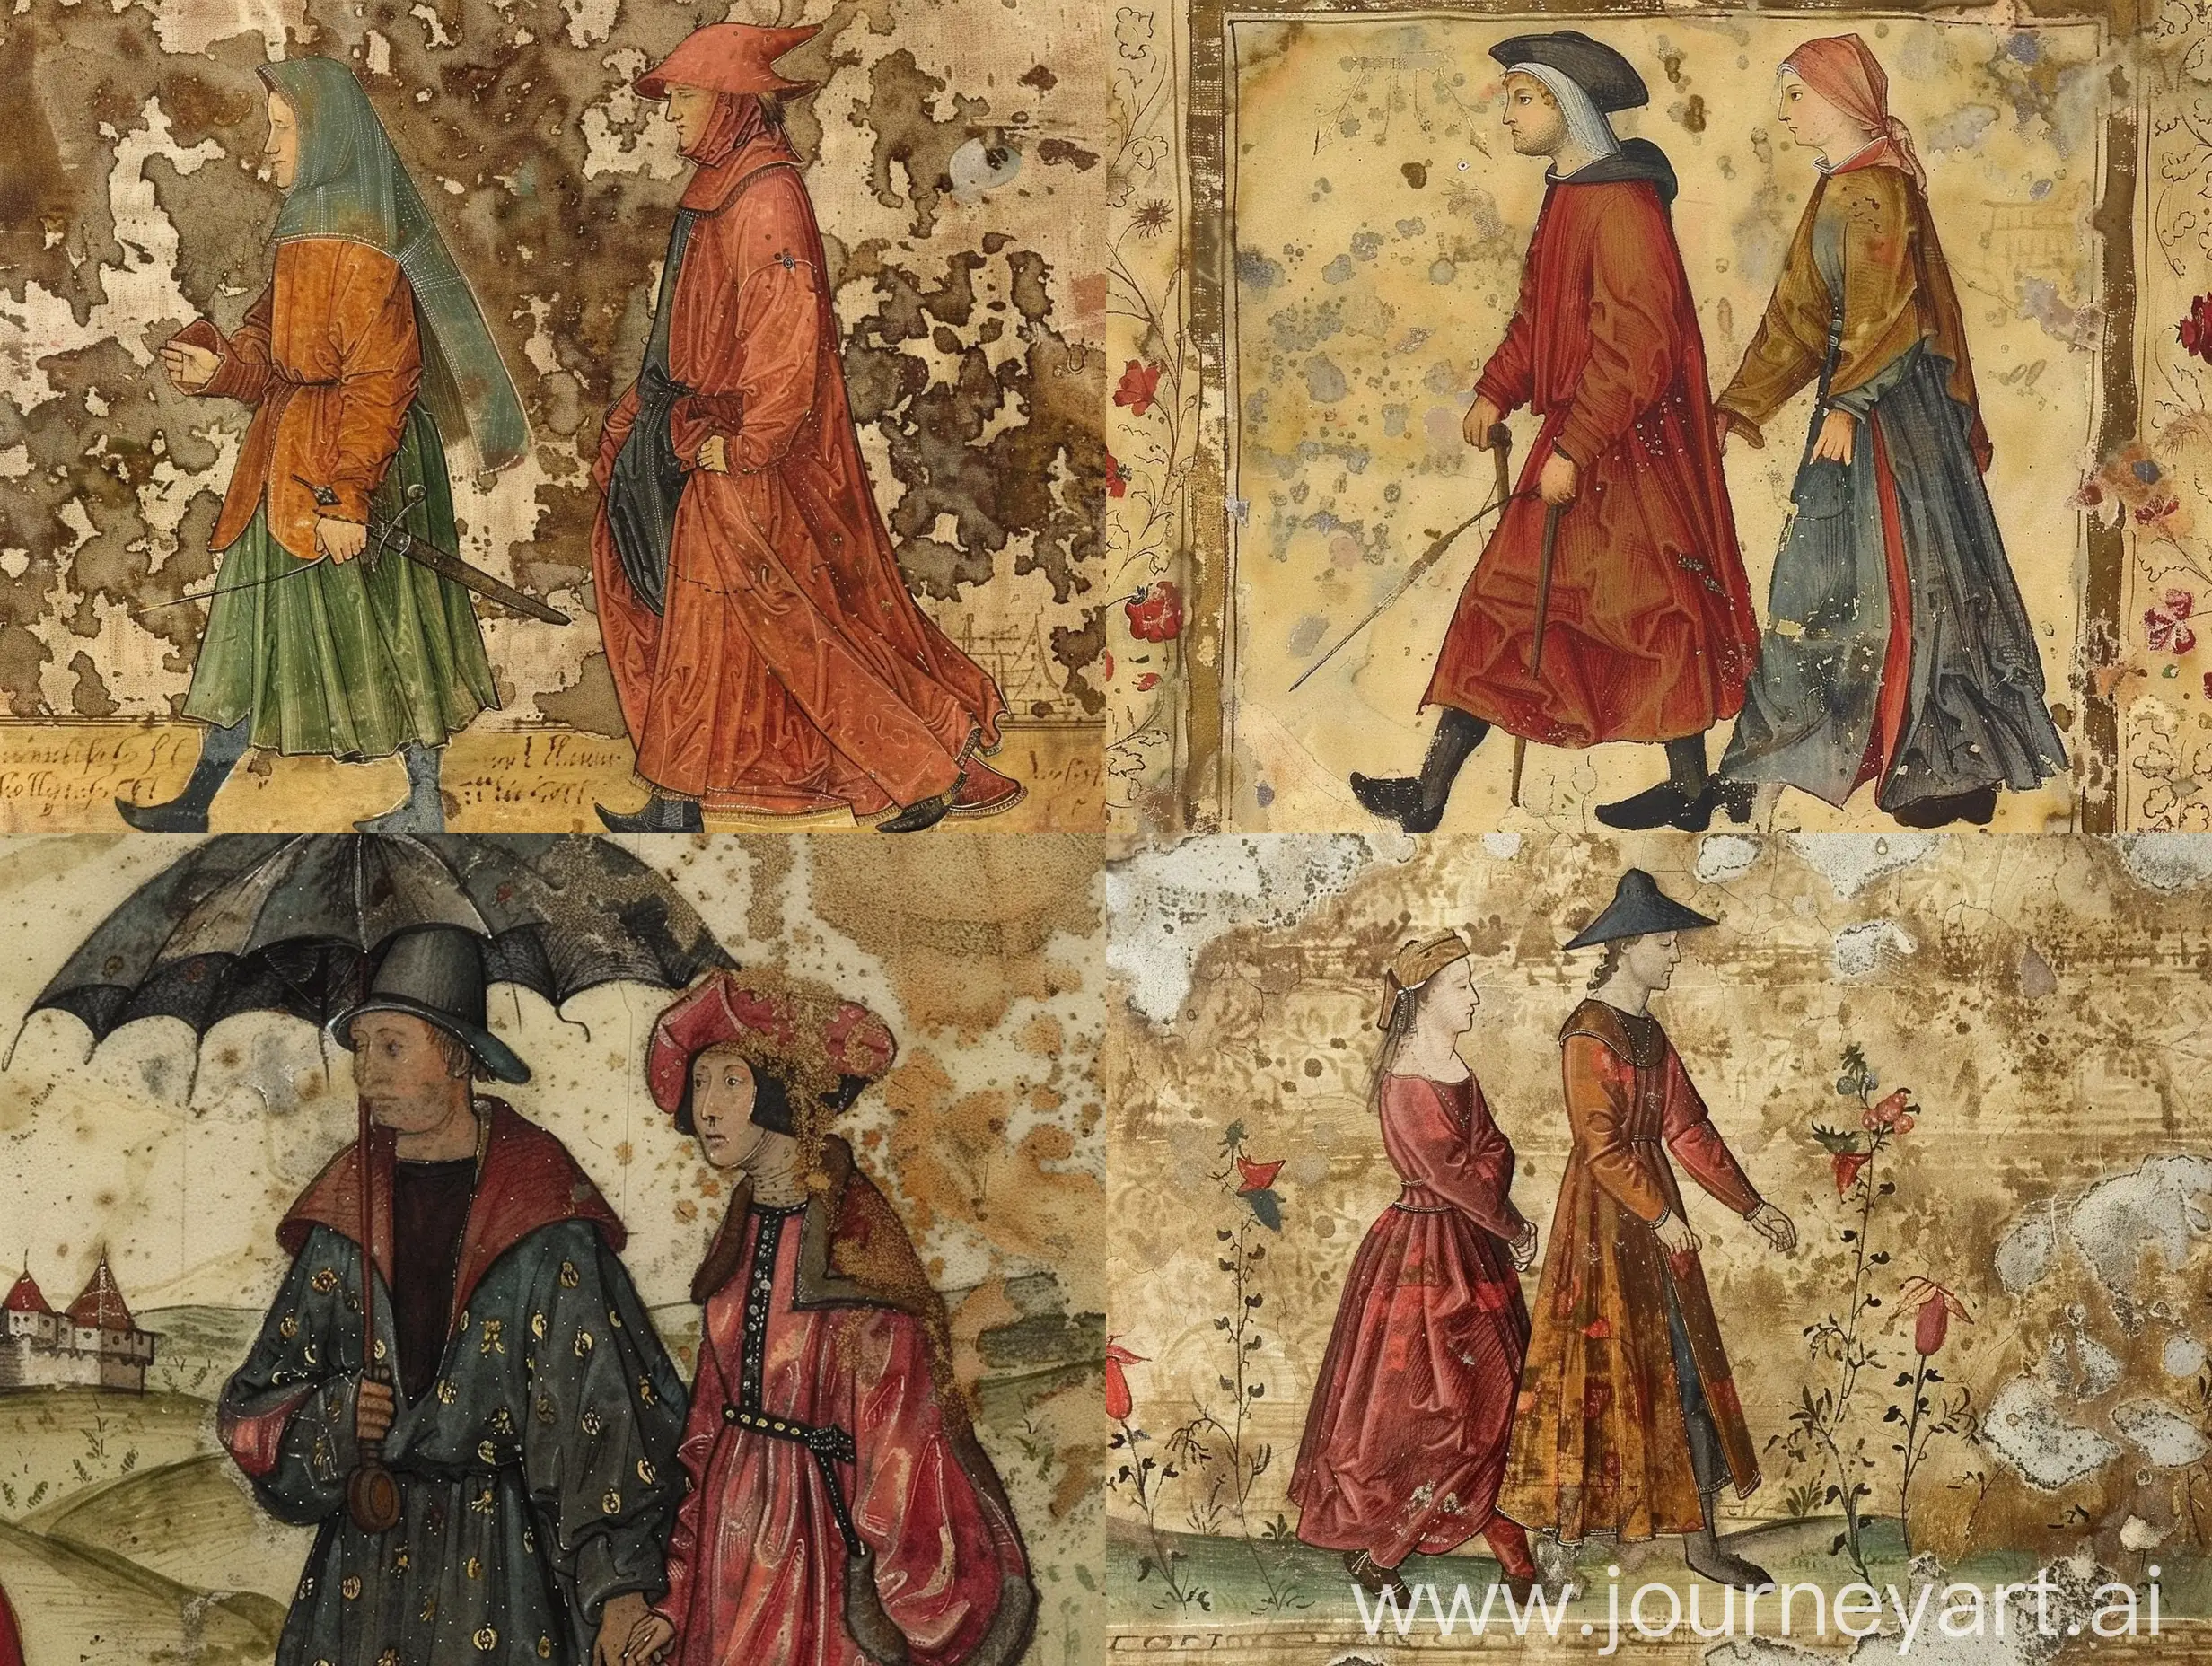 15th century Burgundian noble man and woman walking